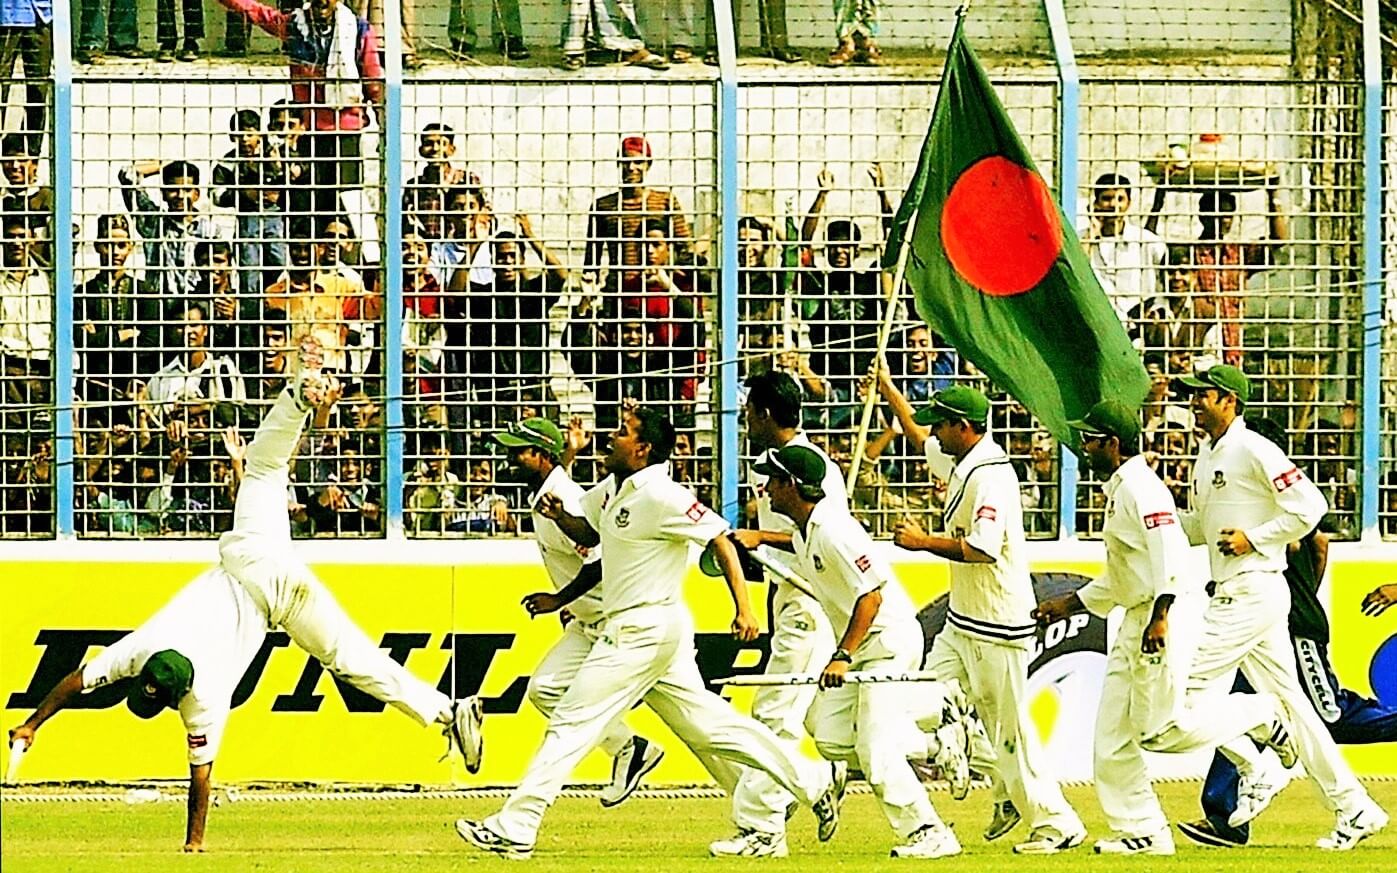 bangladesh test cricket